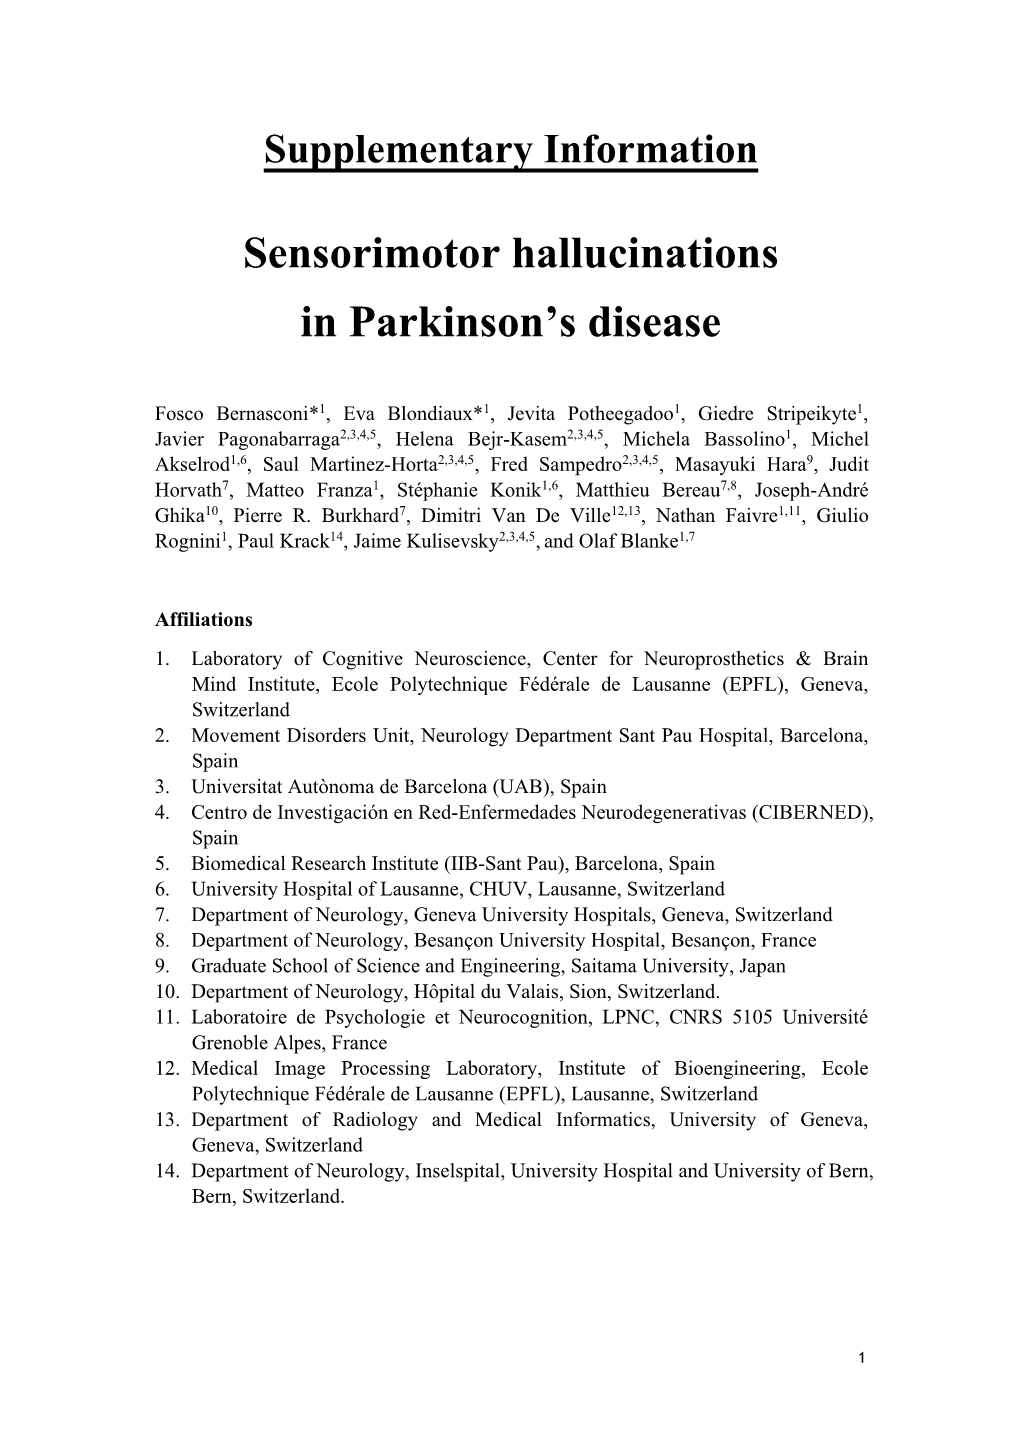 Sensorimotor Hallucinations in Parkinson's Disease